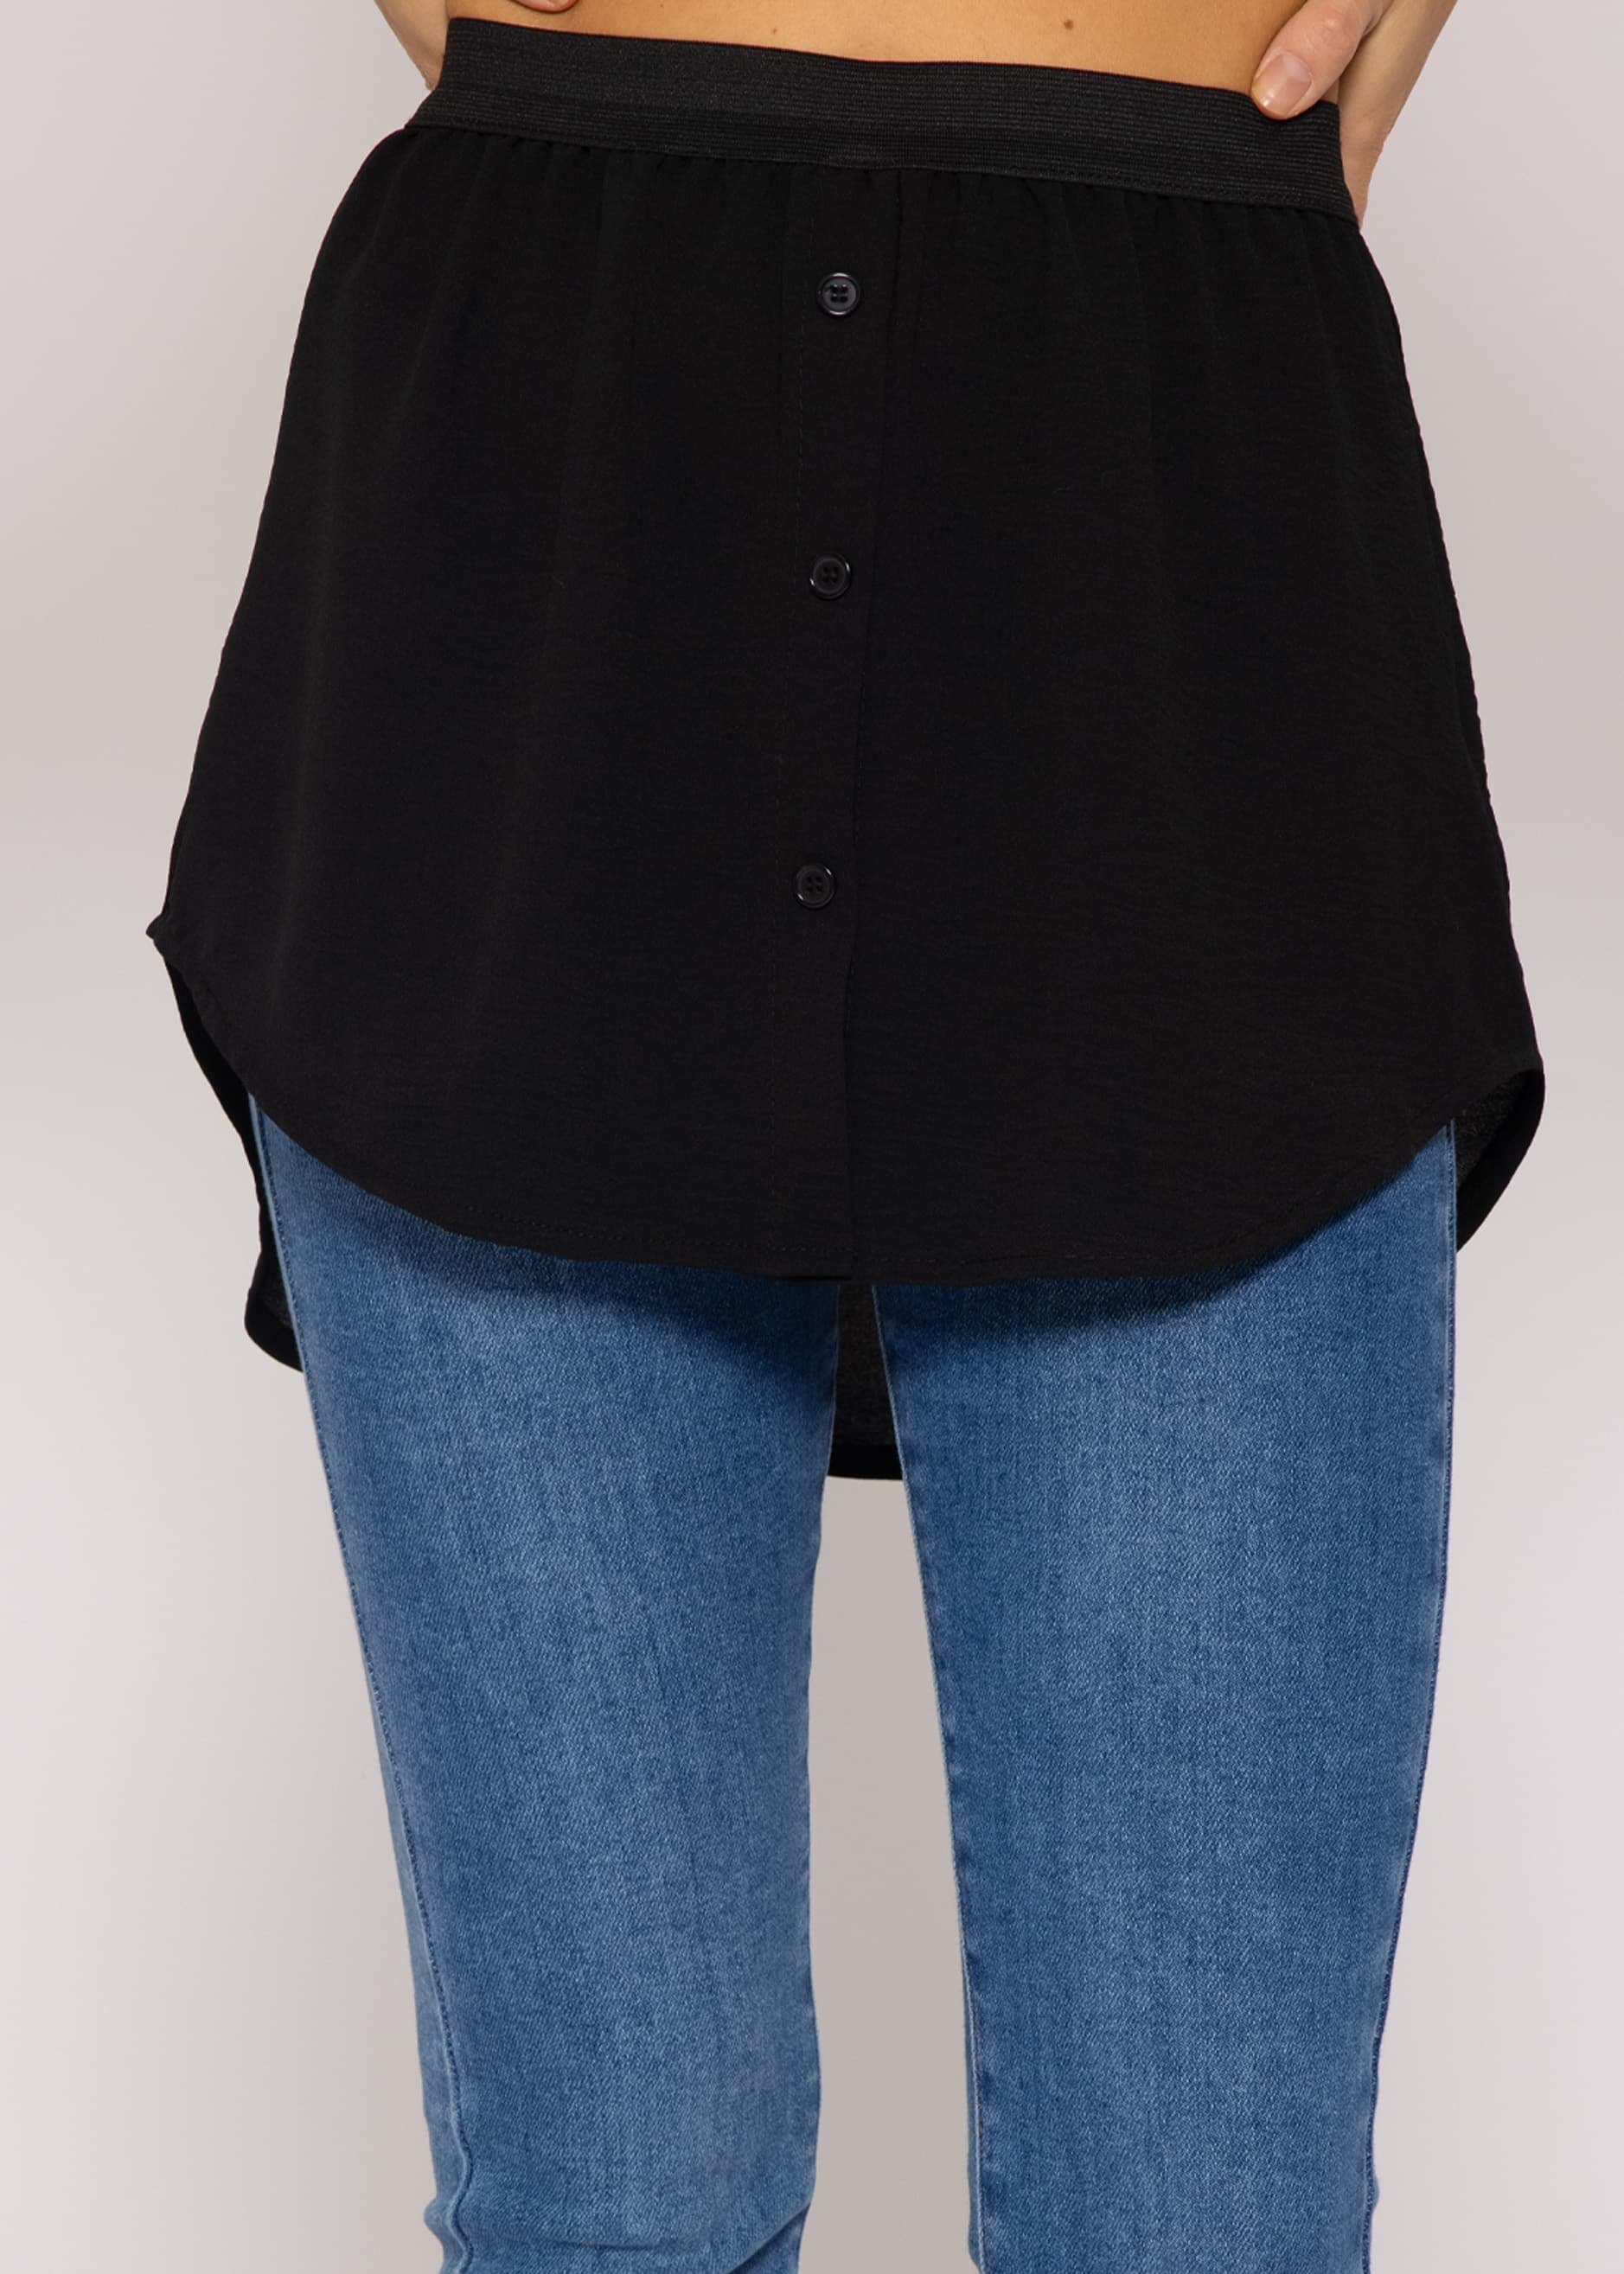 SASSYCLASSY Unterrock Mini Unterrock Damen in Unifarben Blusenrock mit  Gummibund Unterrock mit Ton-in-Ton-Nähten Made in Italy